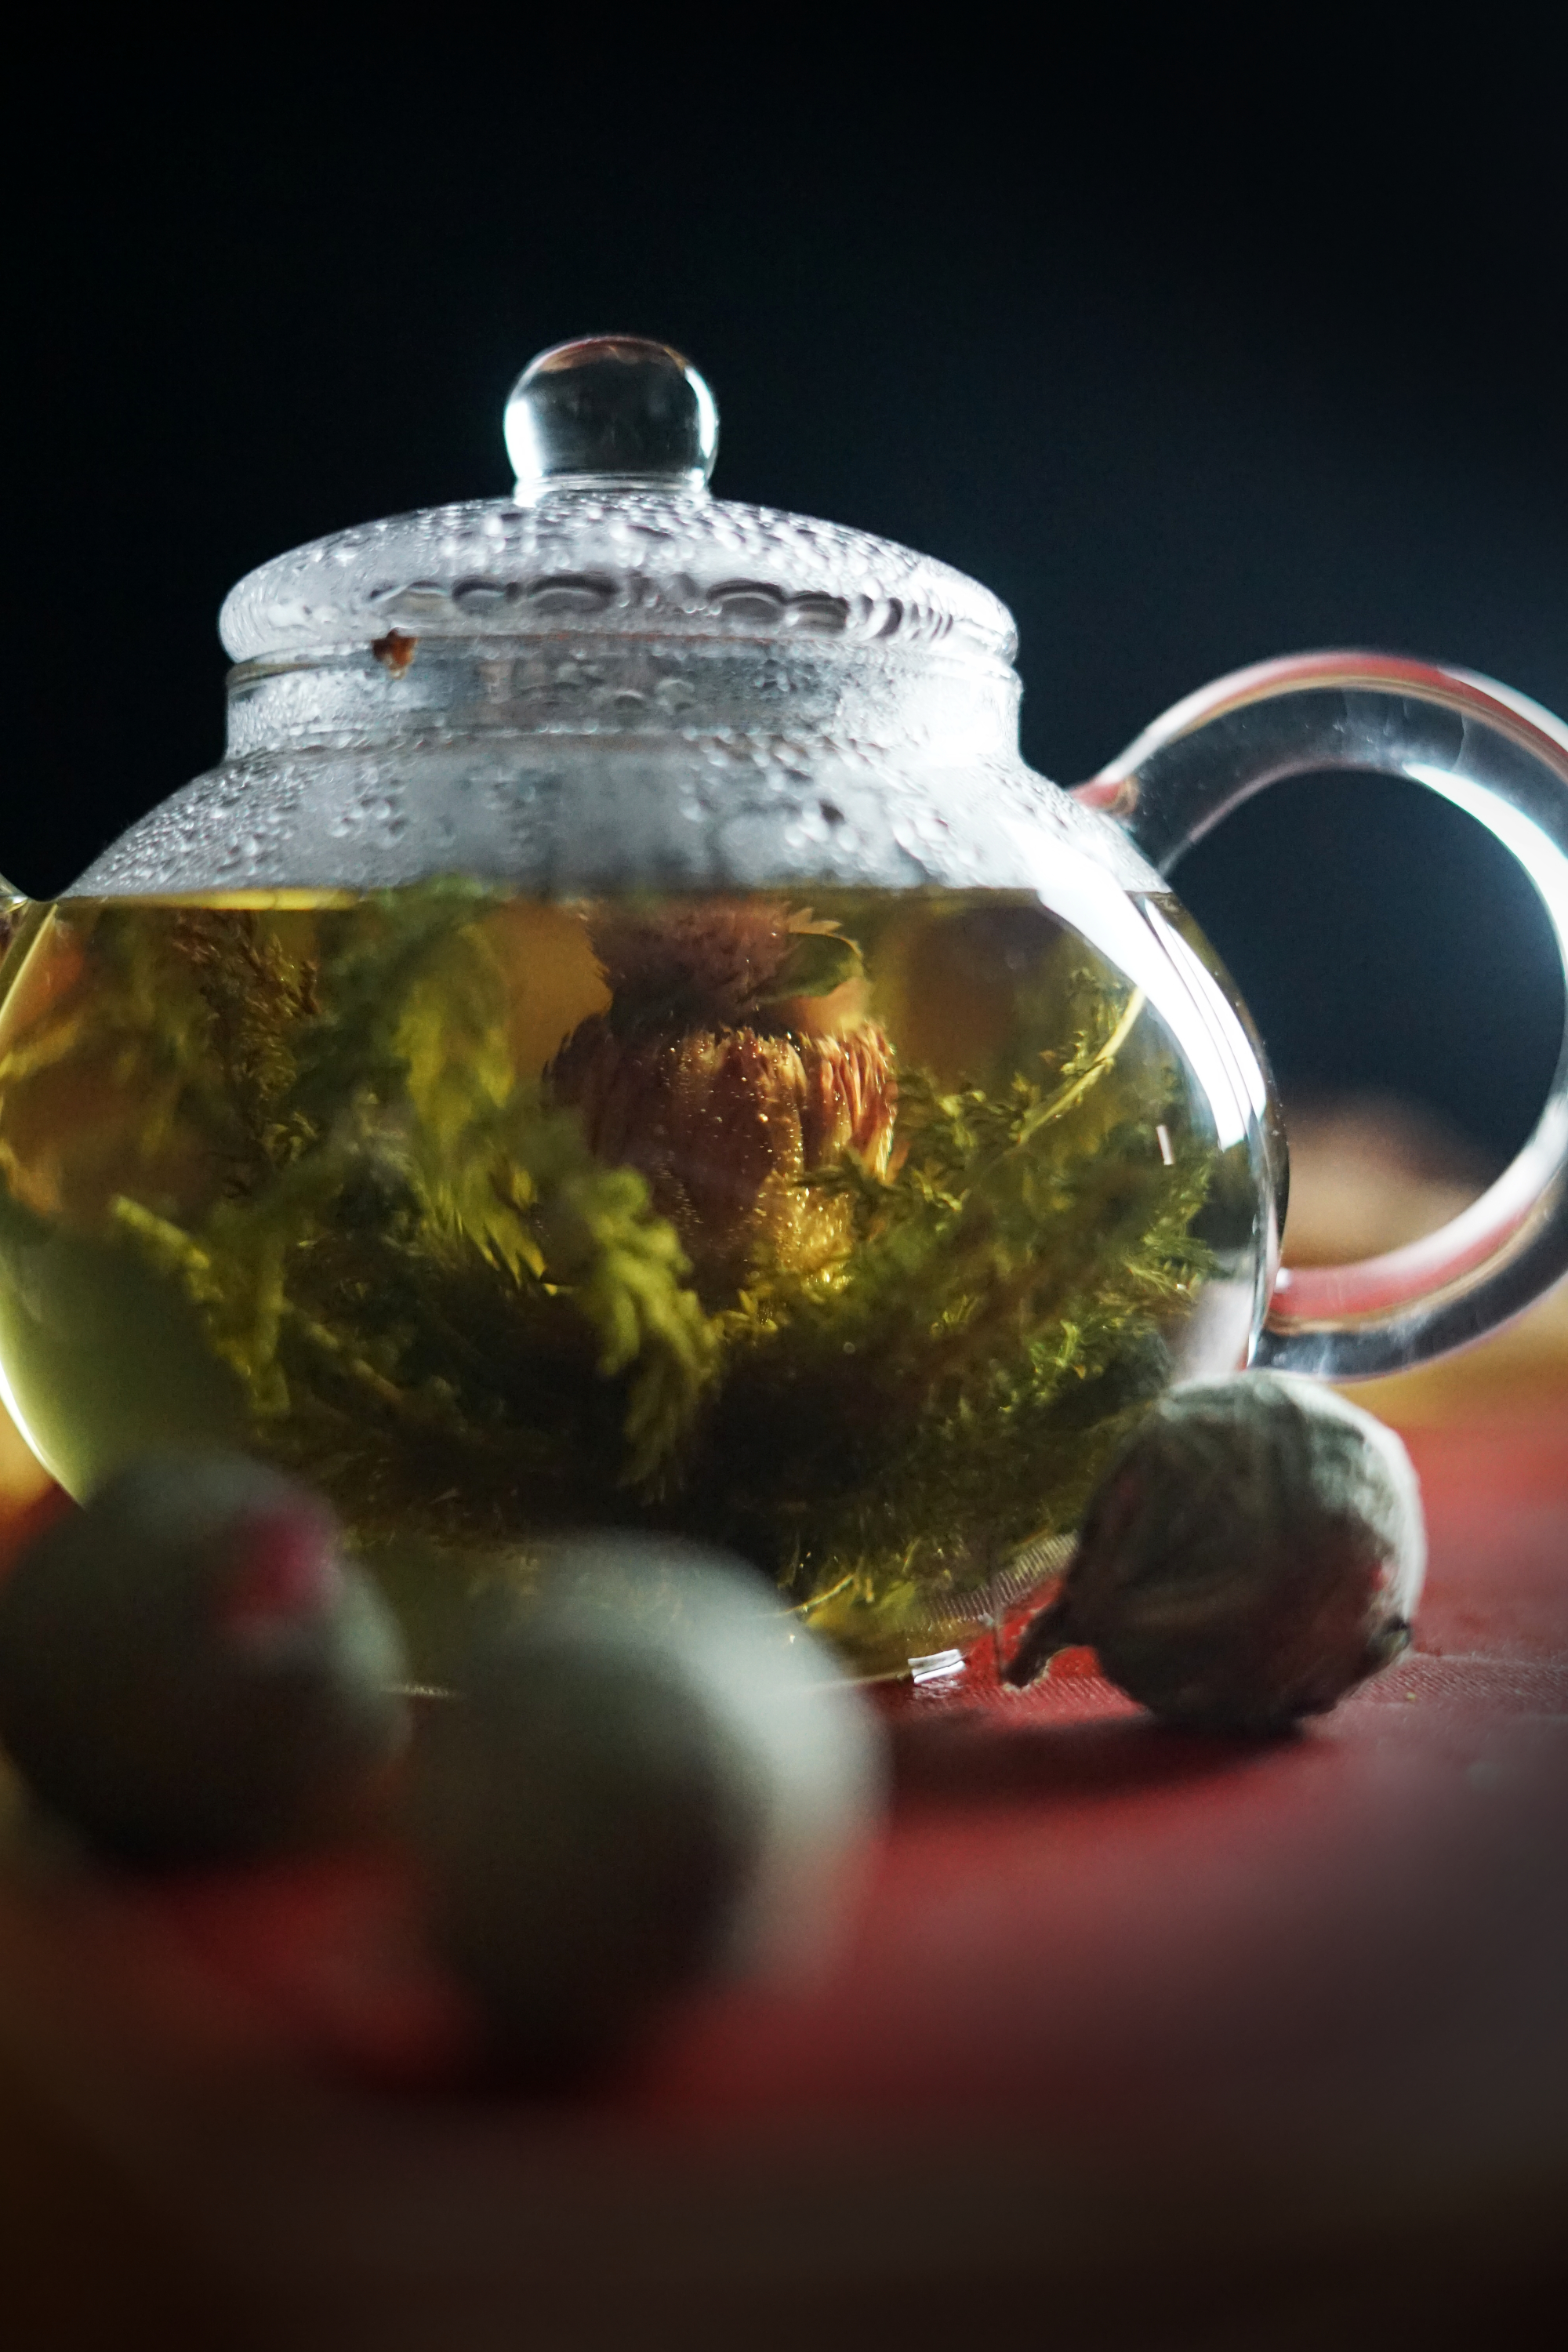 Halo Blooming Tea